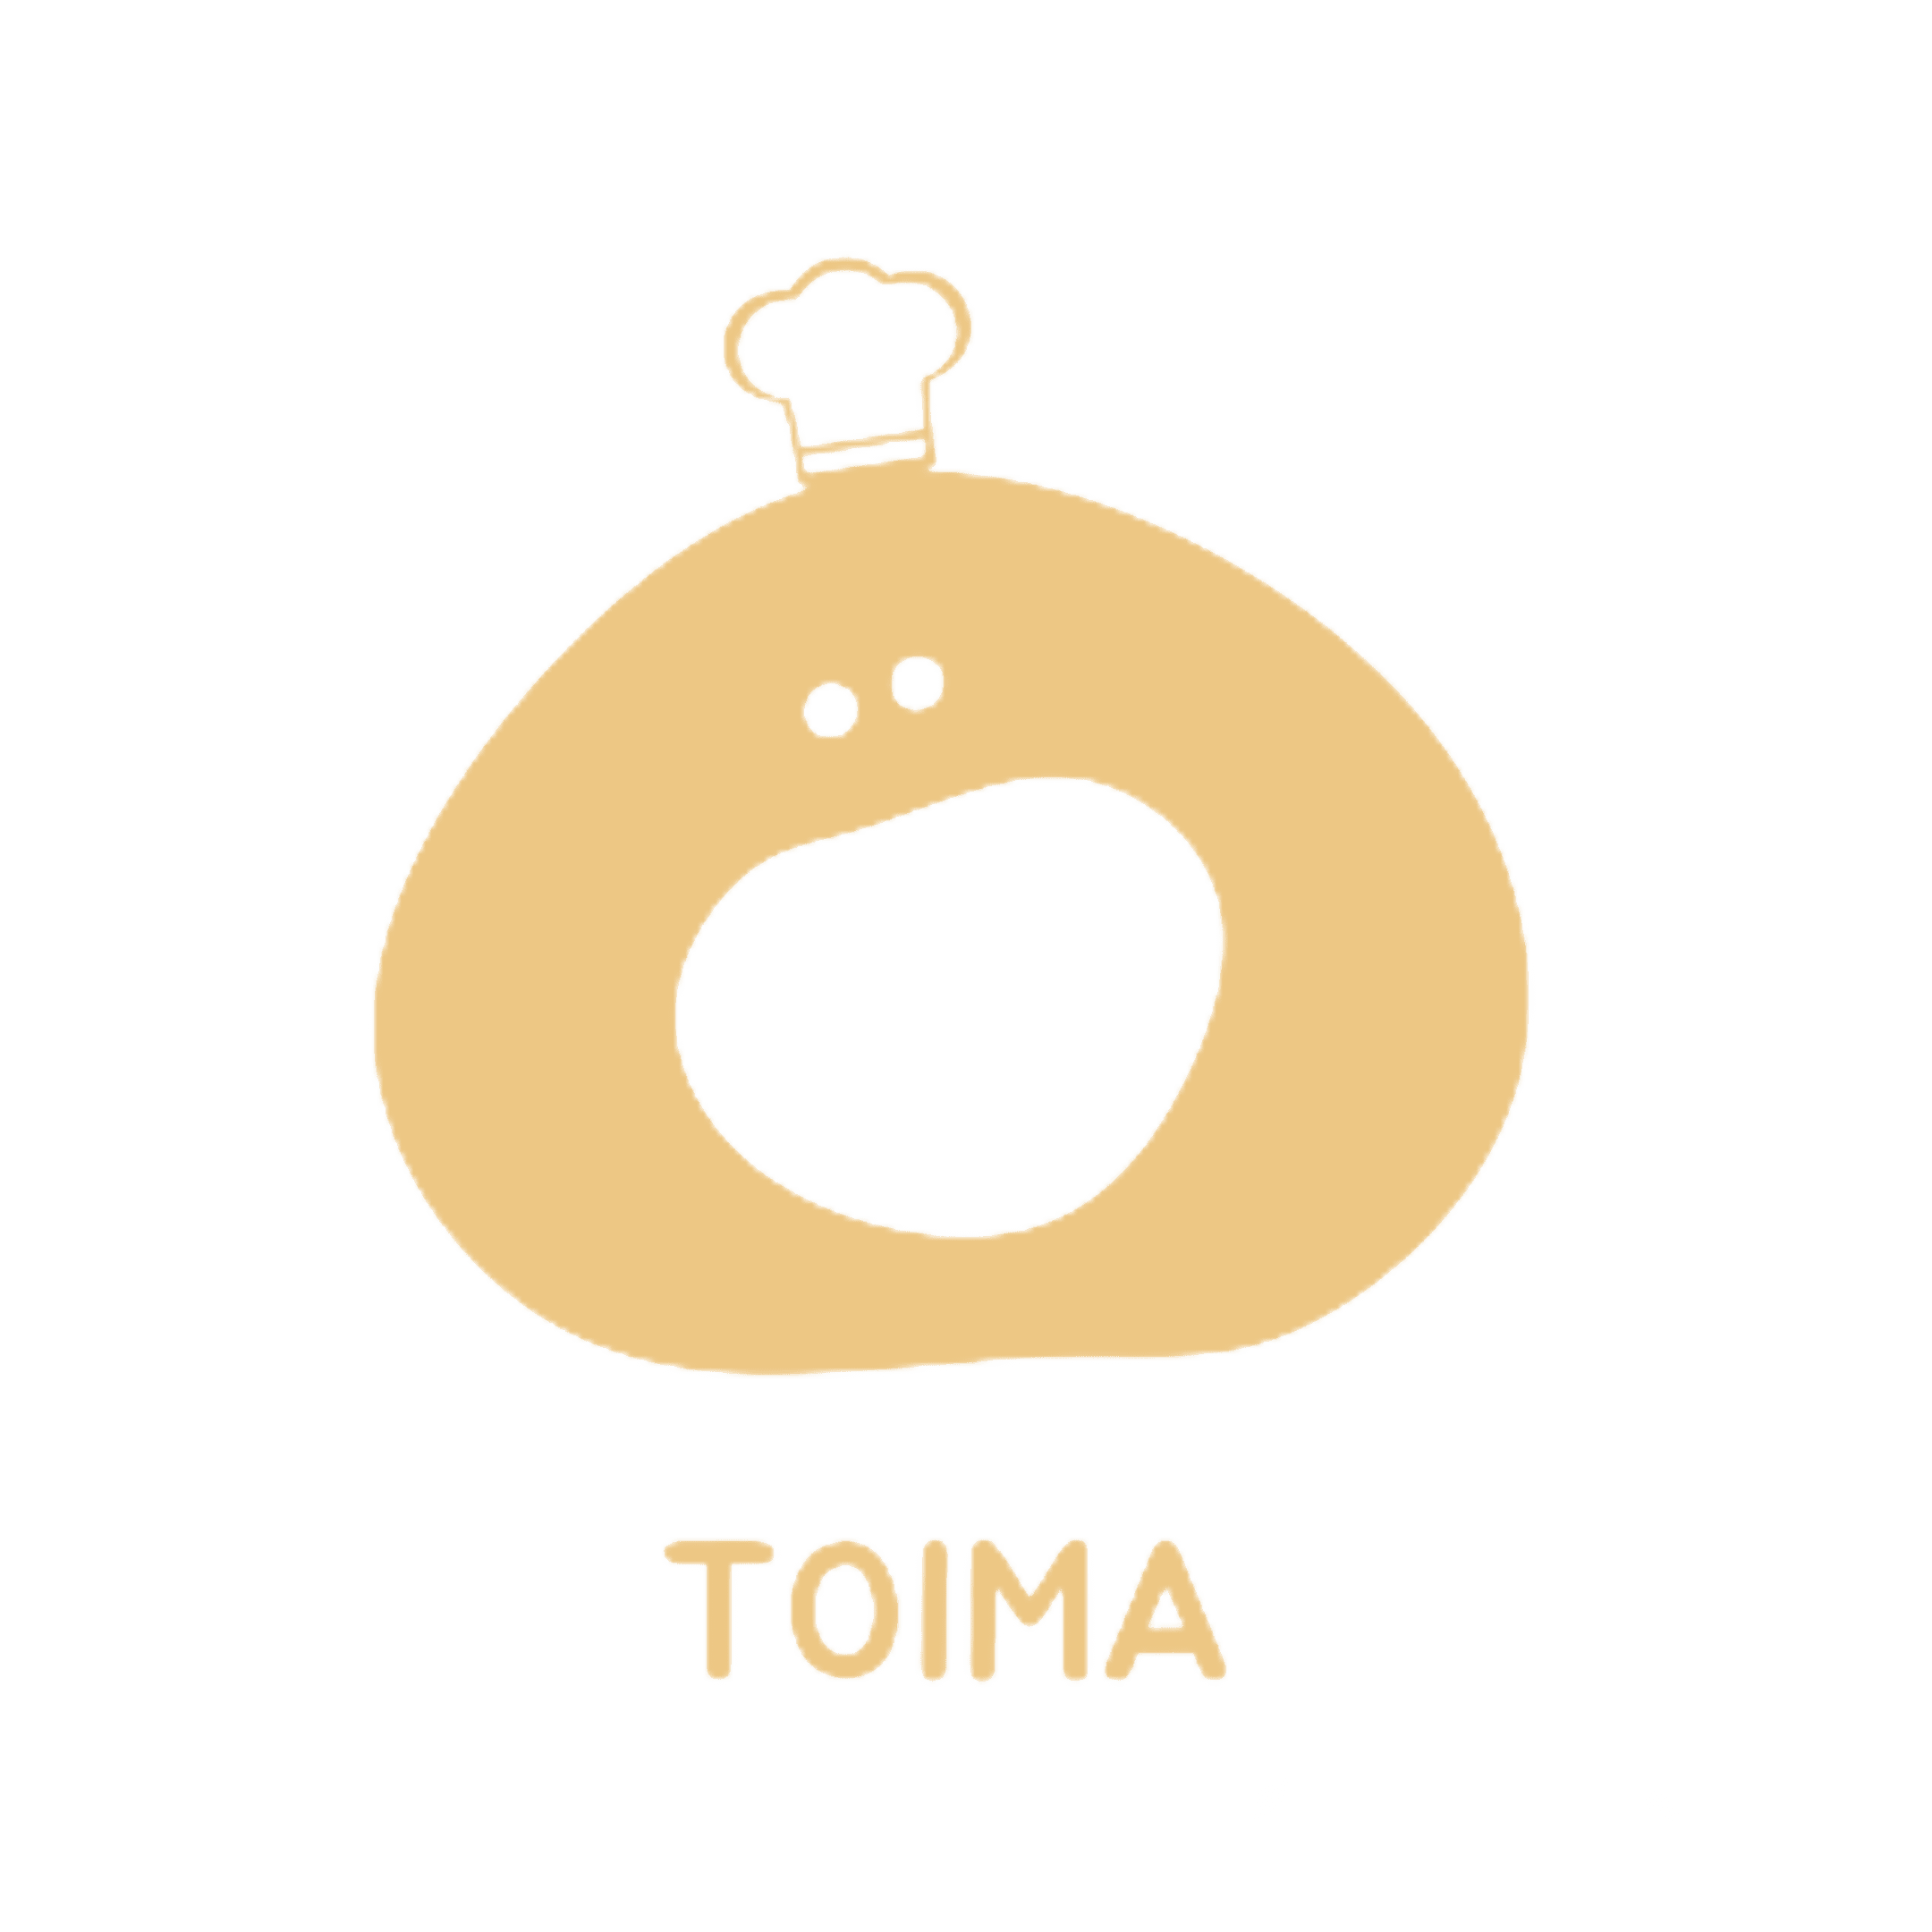 TOIMA – Live a little